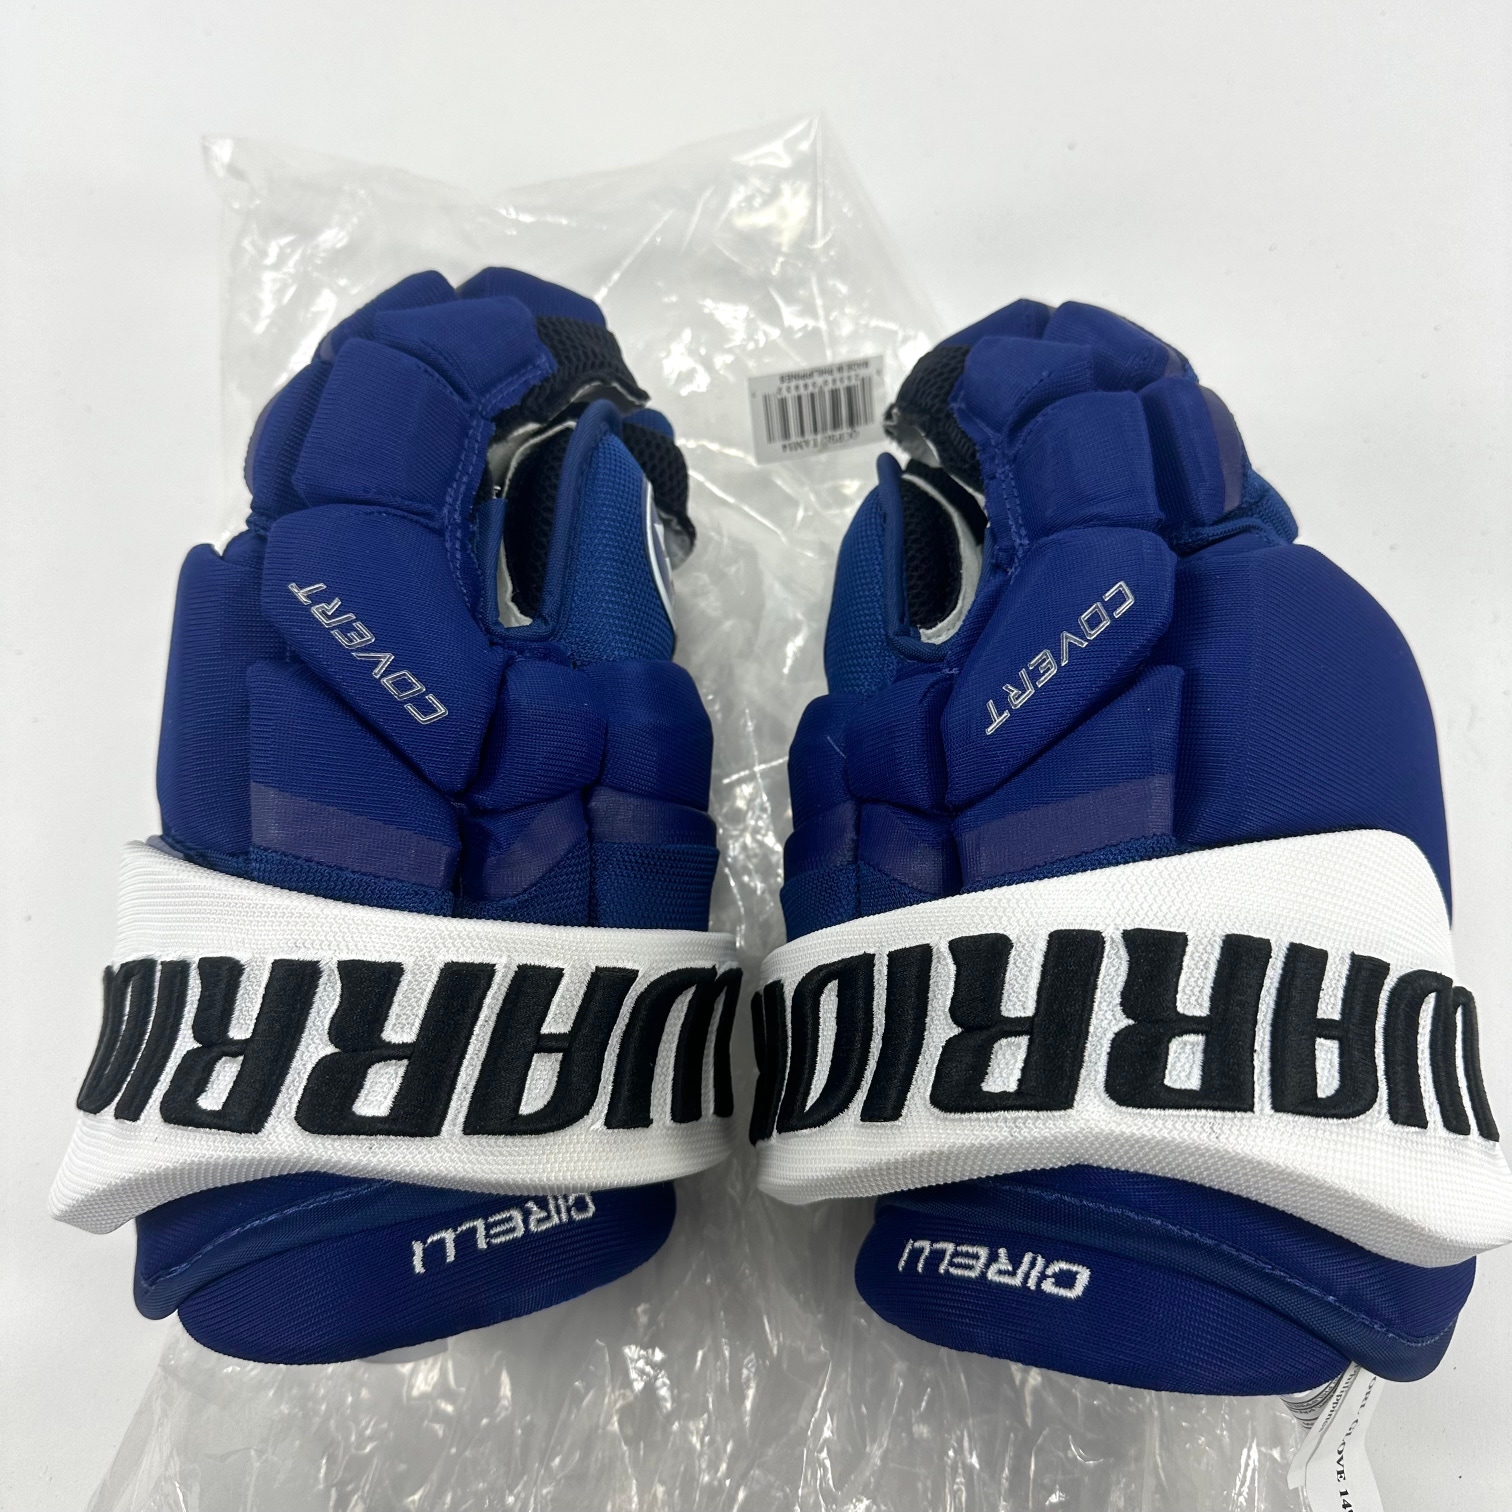 New Royal Warrior Covert QRL Pro Gloves | 14" | Cirelli | Tampa Bay Lightning